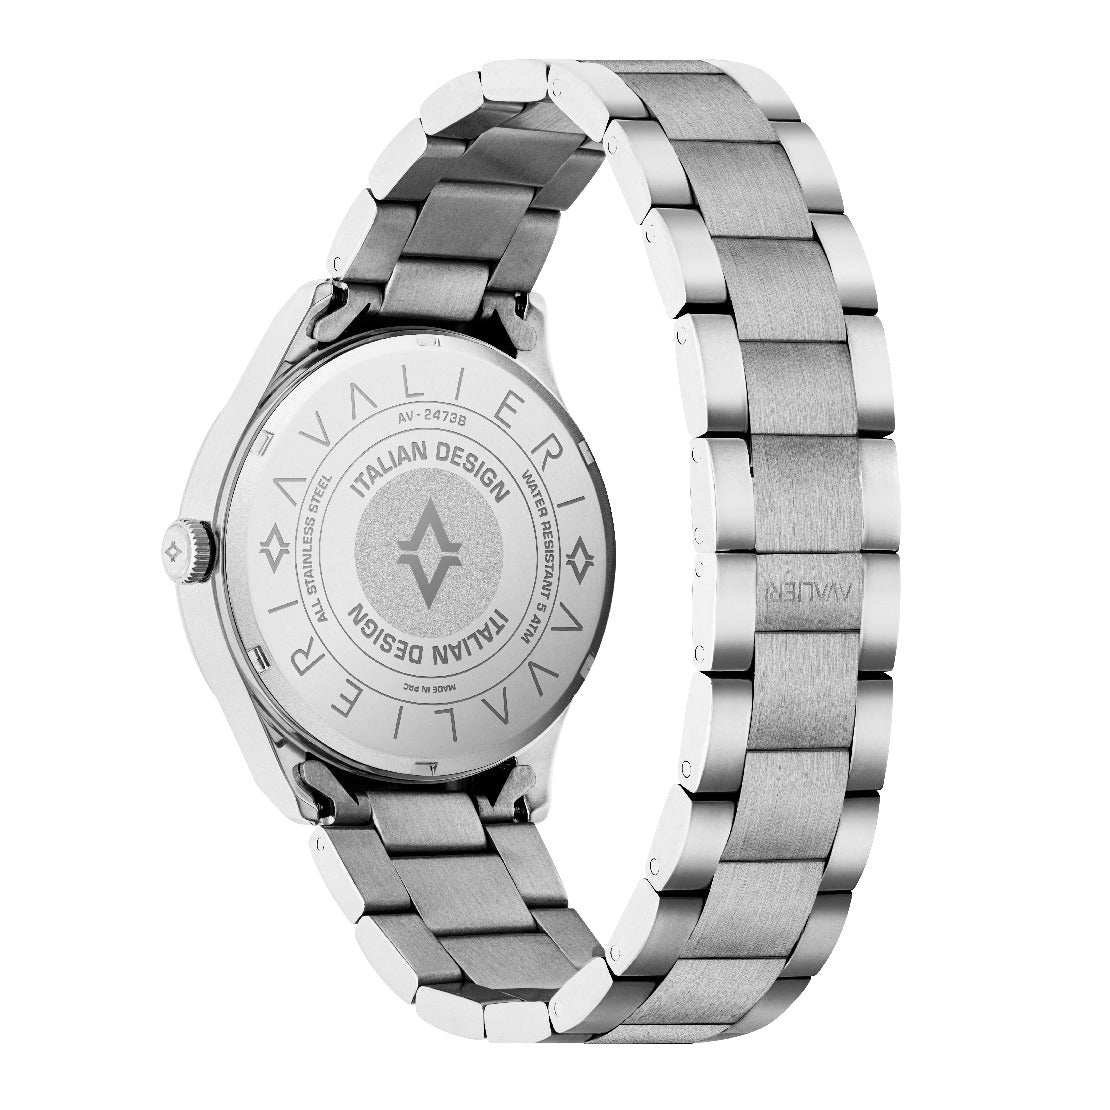 Avalieri Men's Quartz Watch With Silver White Dial - AV-2473B